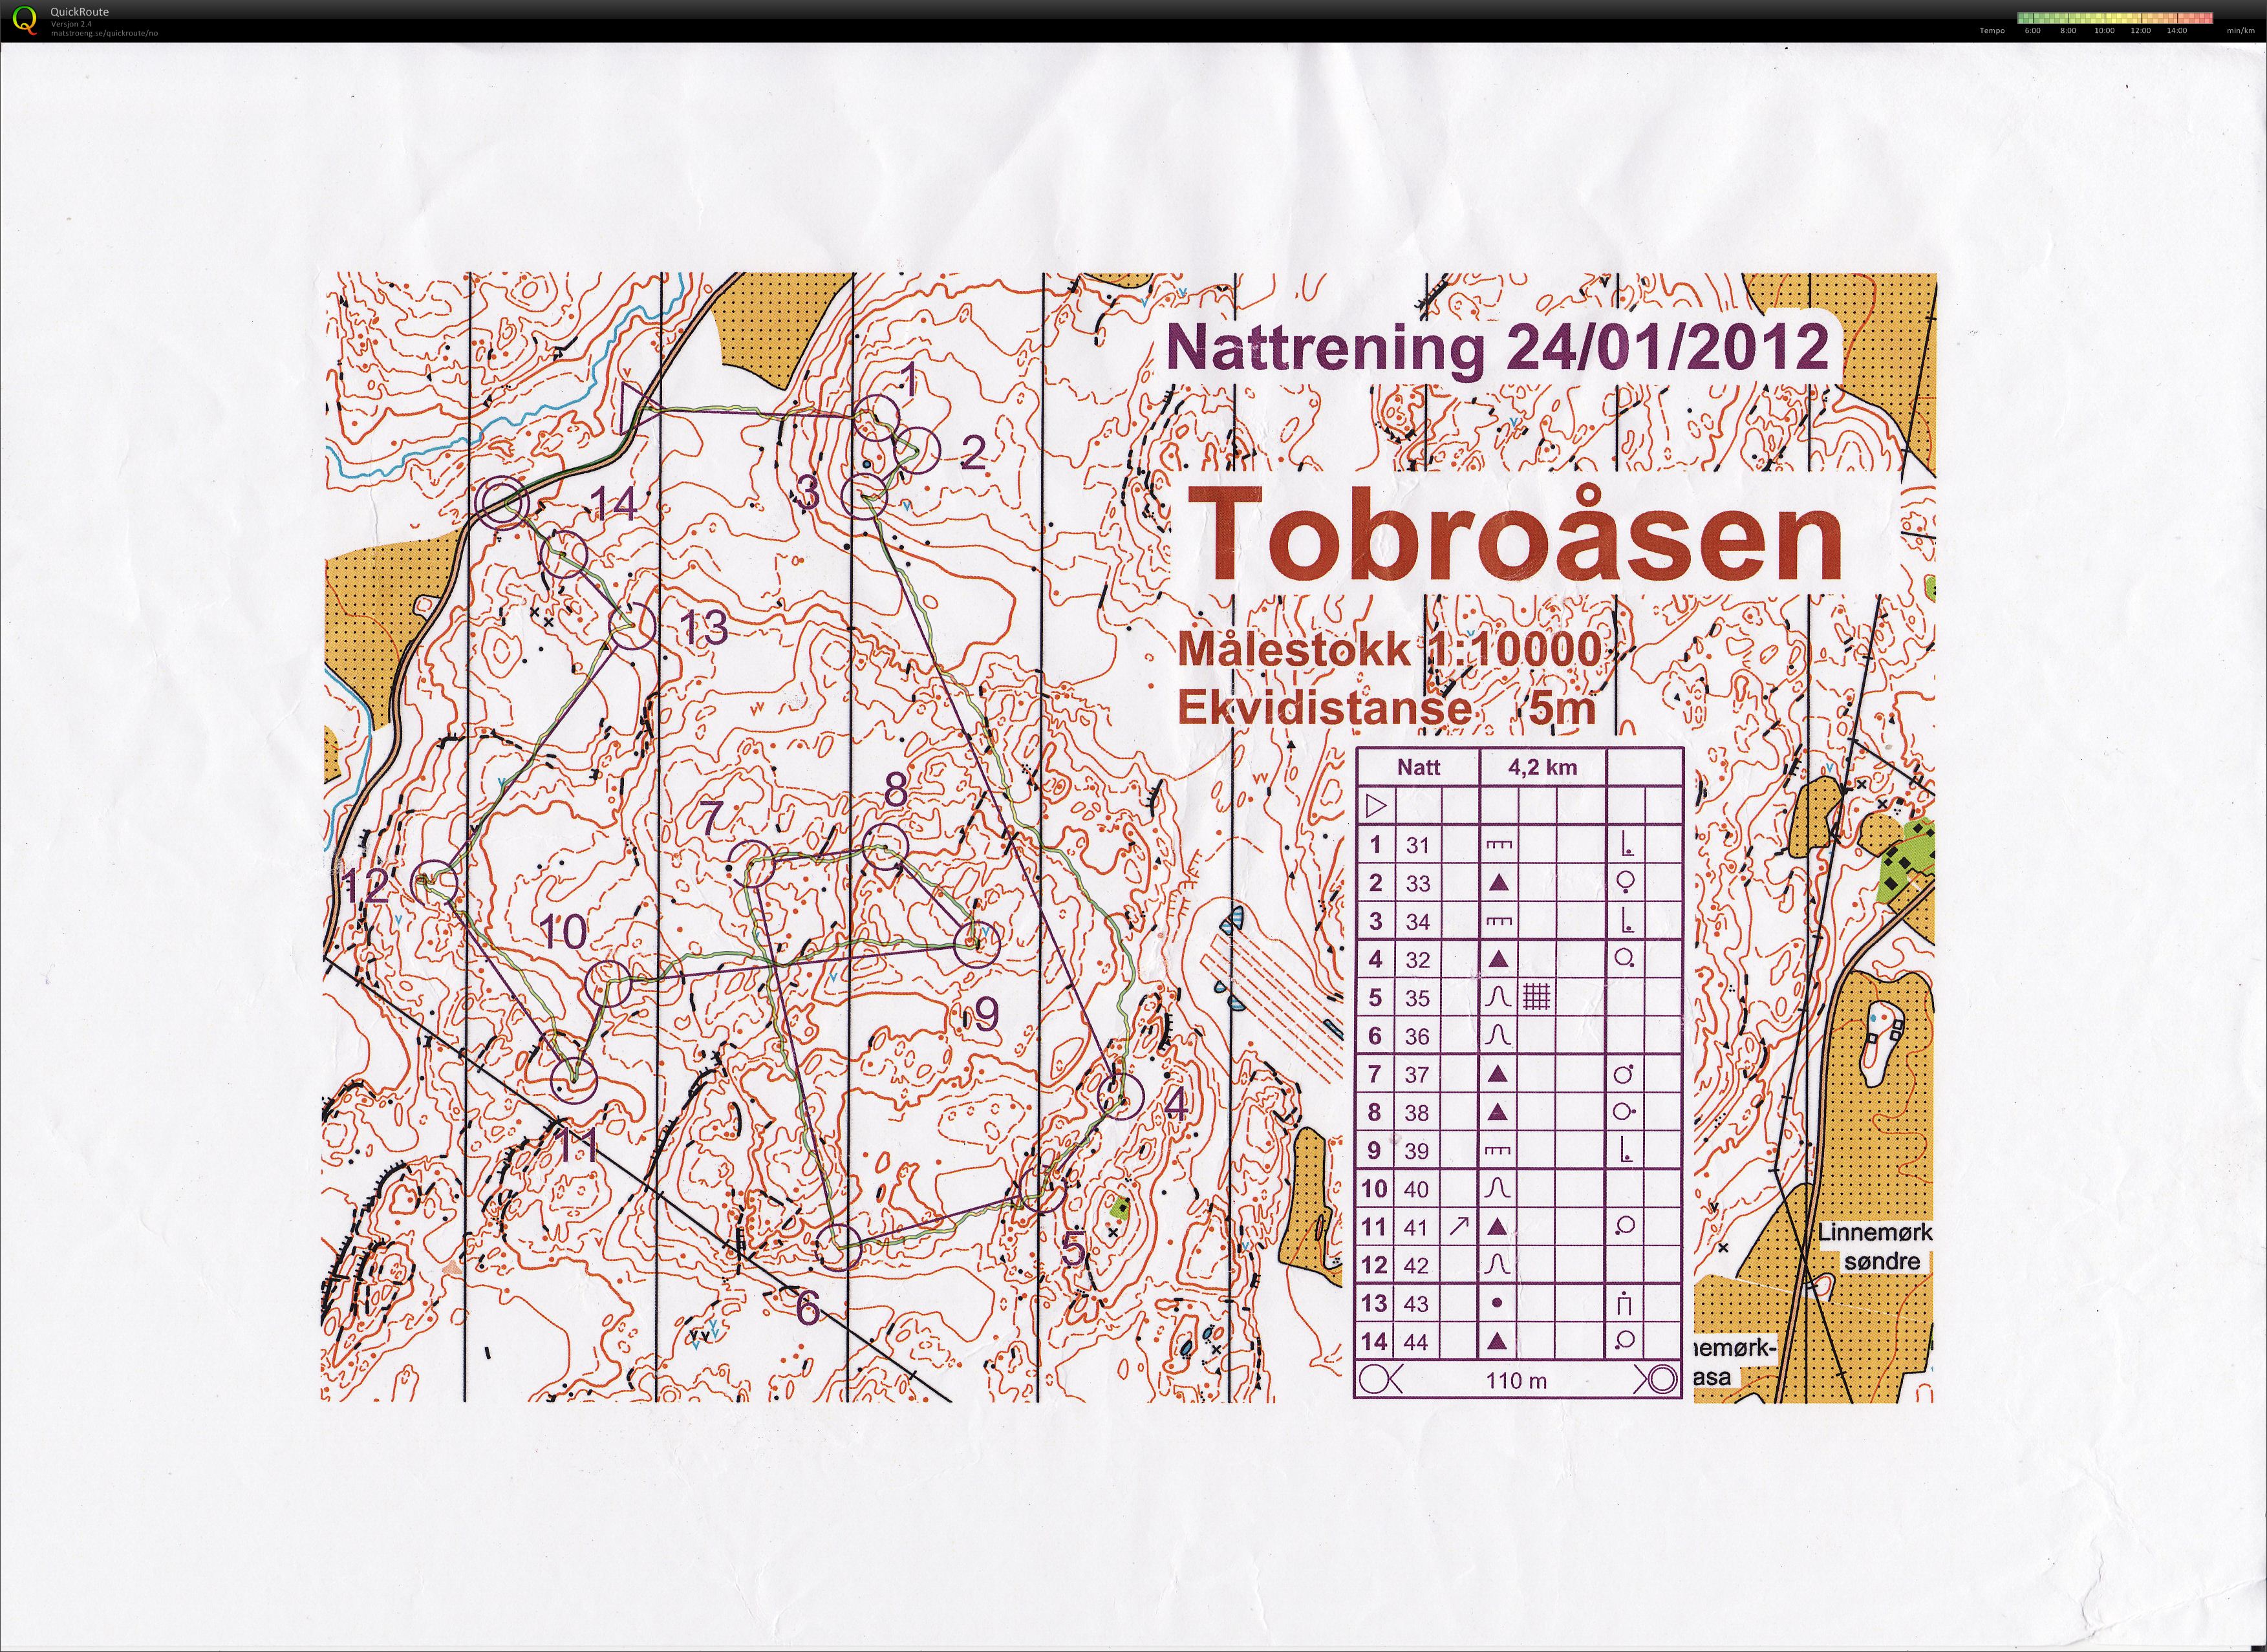 Rolig økt Tobroåsen (14.02.2012)